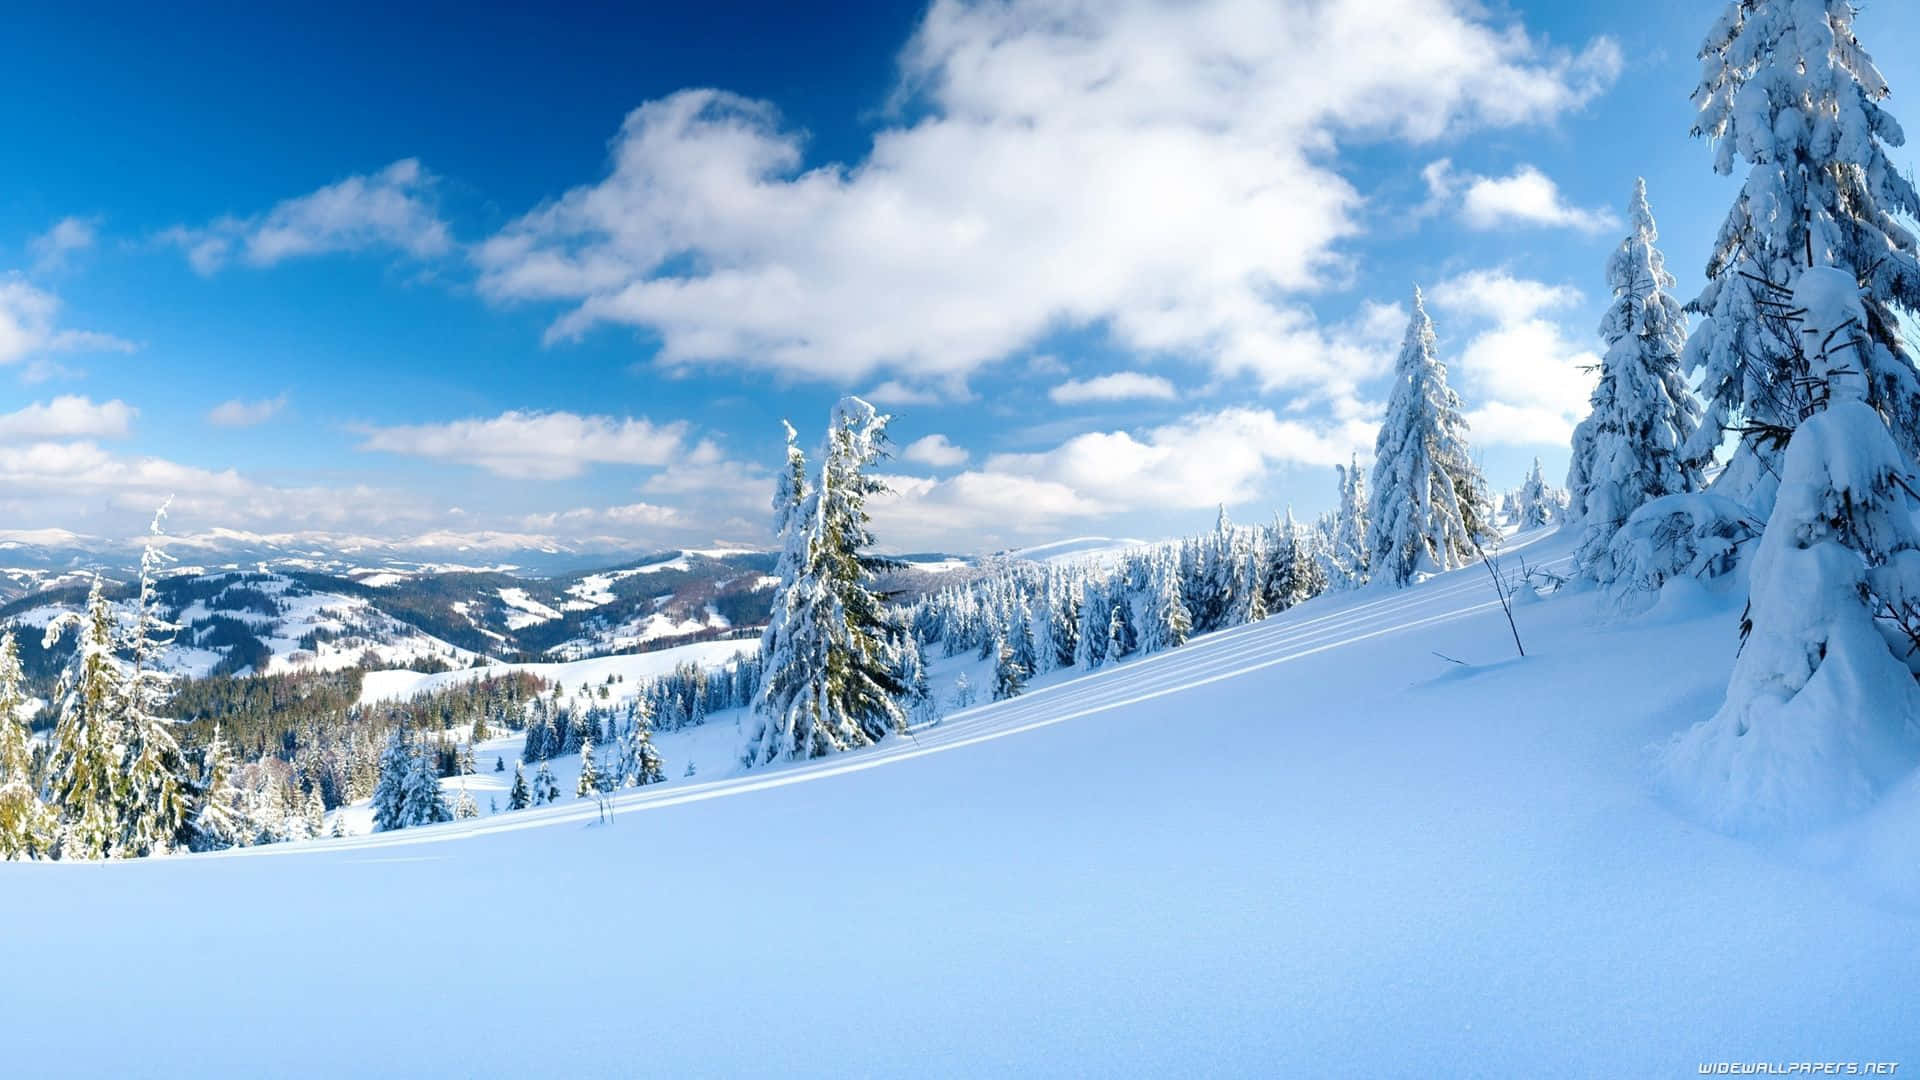 Njutav Den Lugna Skönheten I En Naturlig Vinterlandskap Som Bakgrundsbild På Din Dator Eller Mobiltelefon.